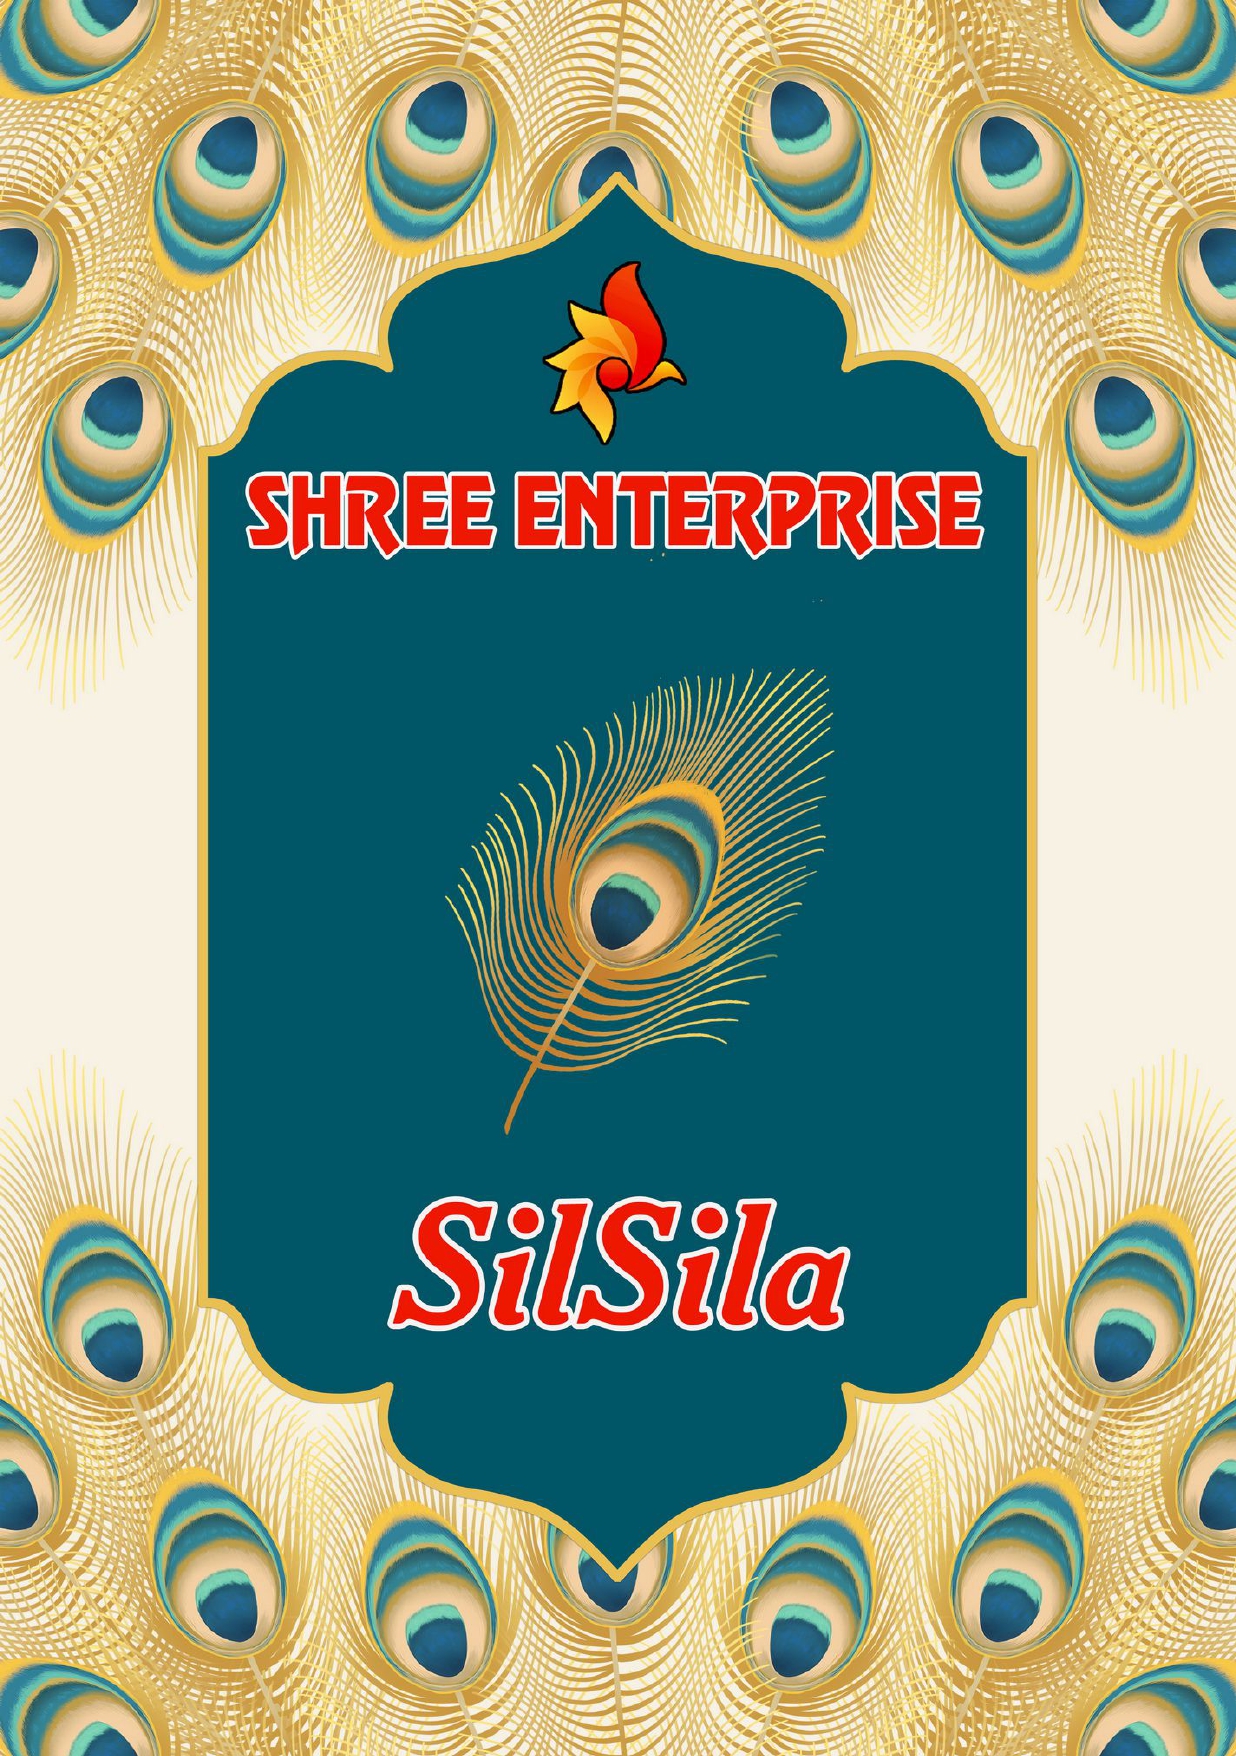 Shree Enterprise Silsila Printed Cotton Dress Material At Wh...